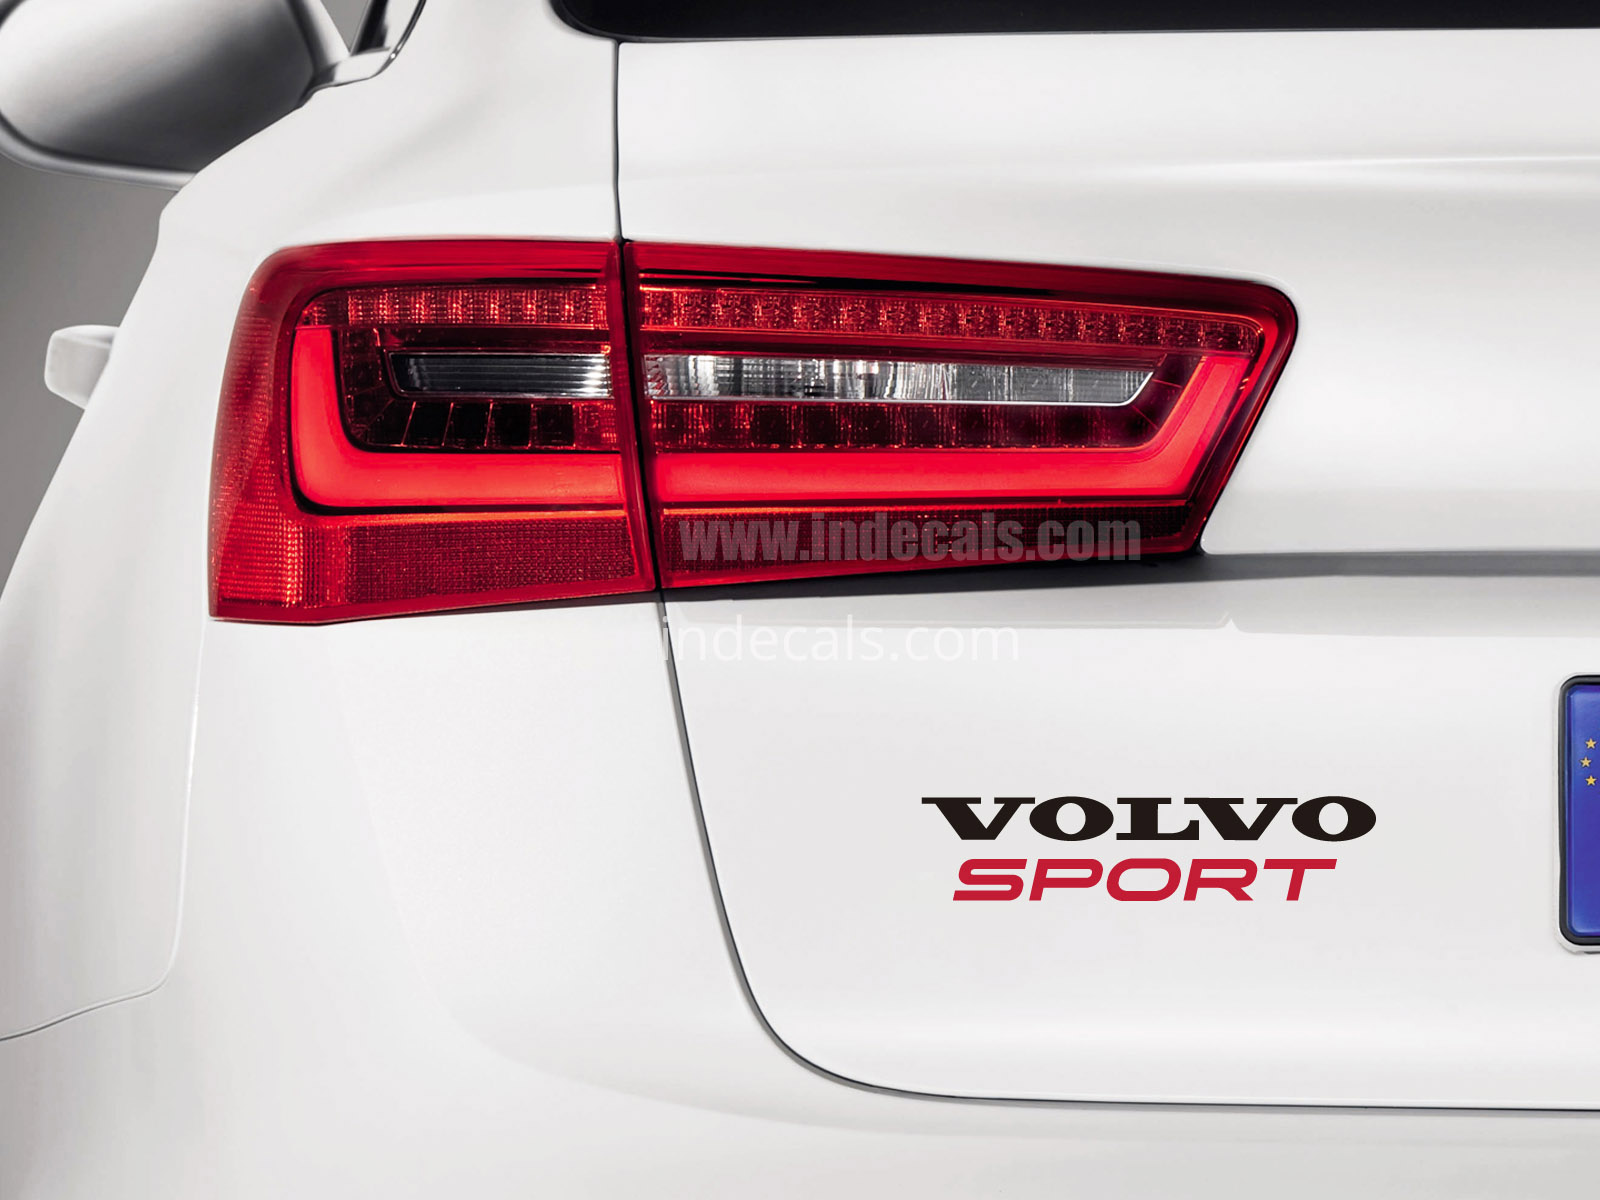 1 x Volvo Sports Sticker for Trunk - Black & Red